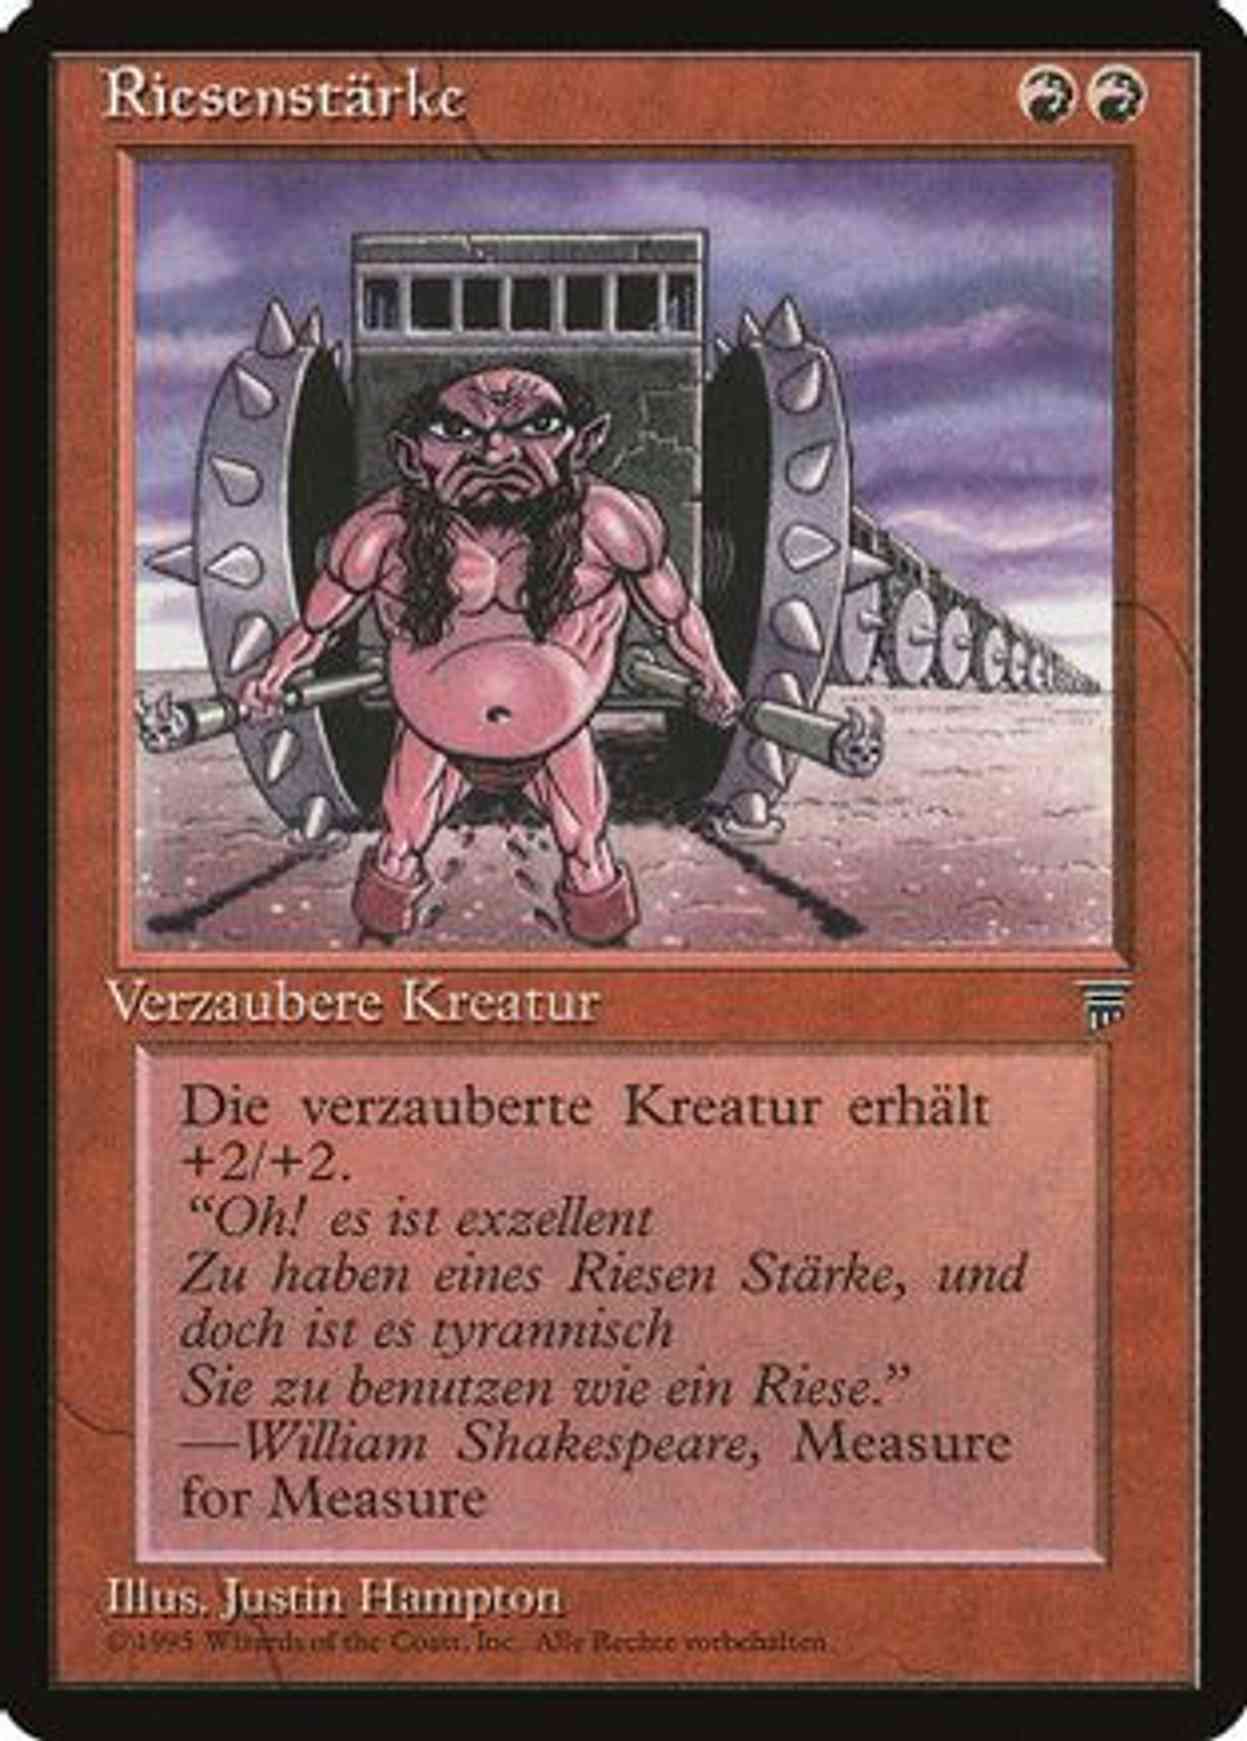 Giant Strength (German) - "Riesenstarke" magic card front